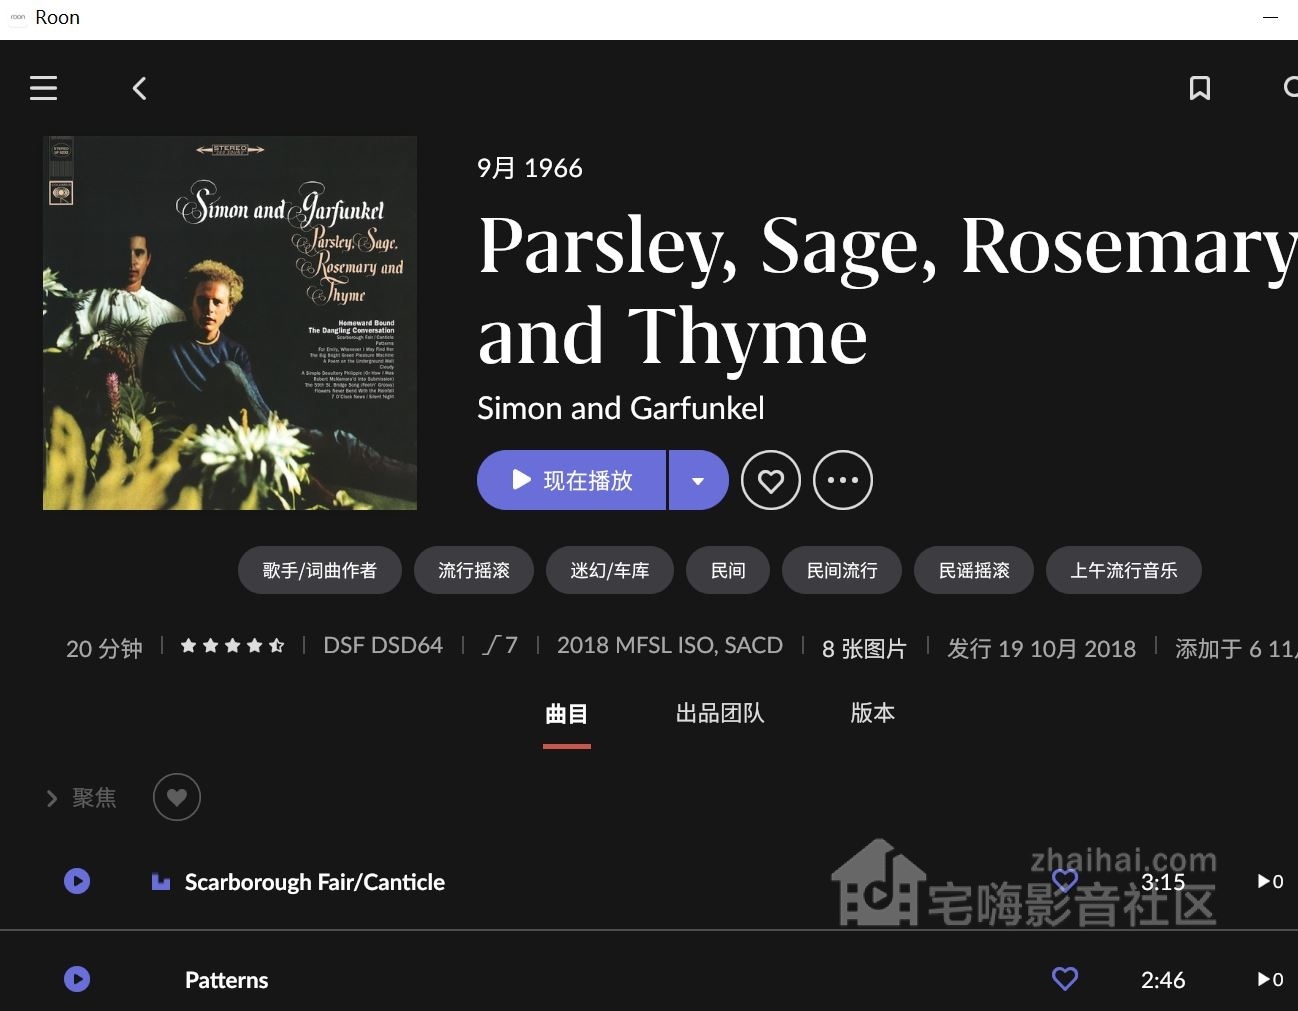 Simon And Garfunkel - Parsley Sage Rosemary And Thyme 1966 [SACD].JPG